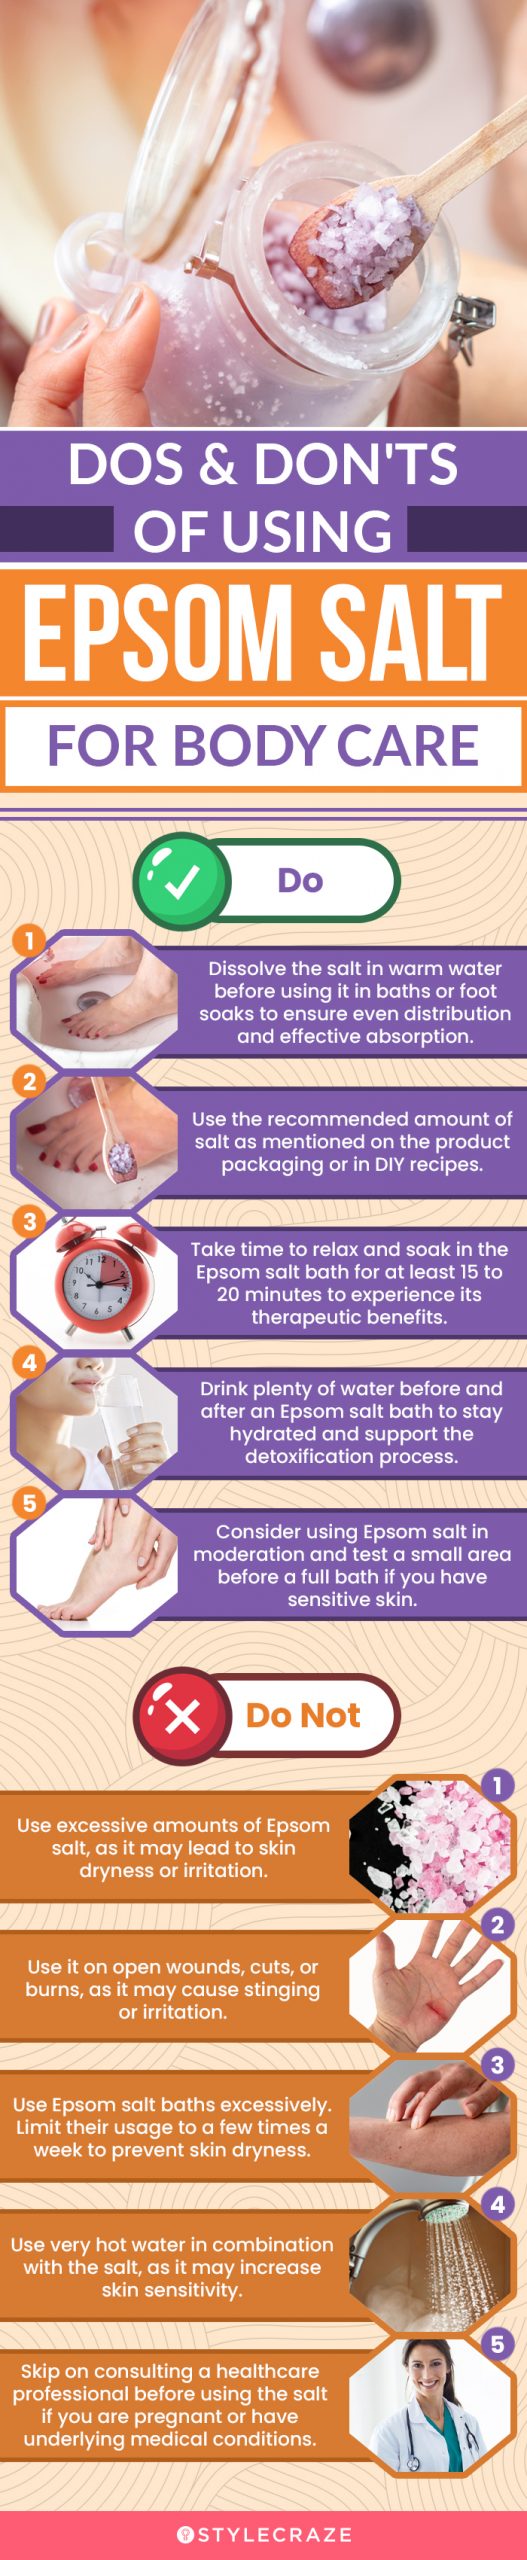 Dos & Don’ts Of Using Epsom Salt For Body Care (infographic)